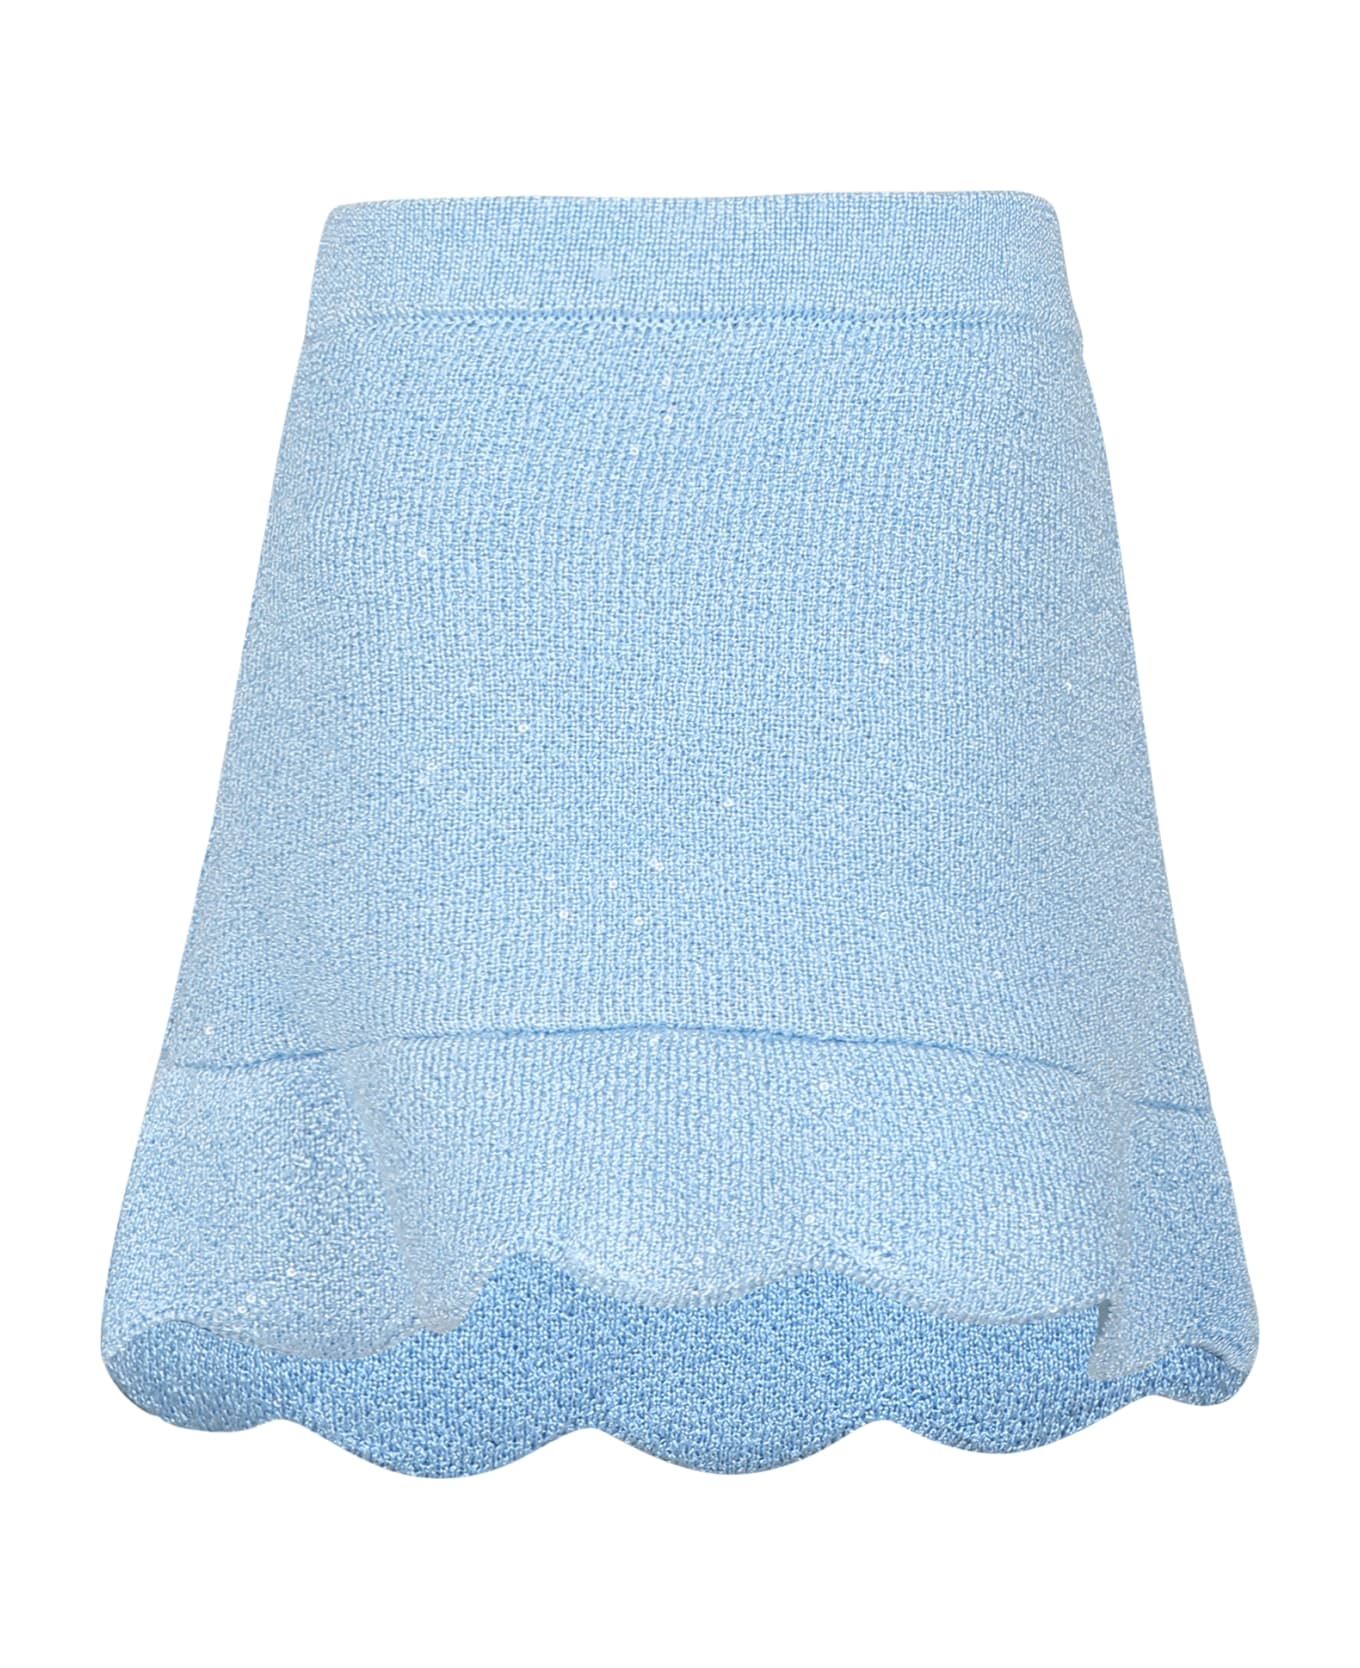 self-portrait Elegant Sky Blue Knit Skirt For Girl With Sequins - Light Blue ボトムス